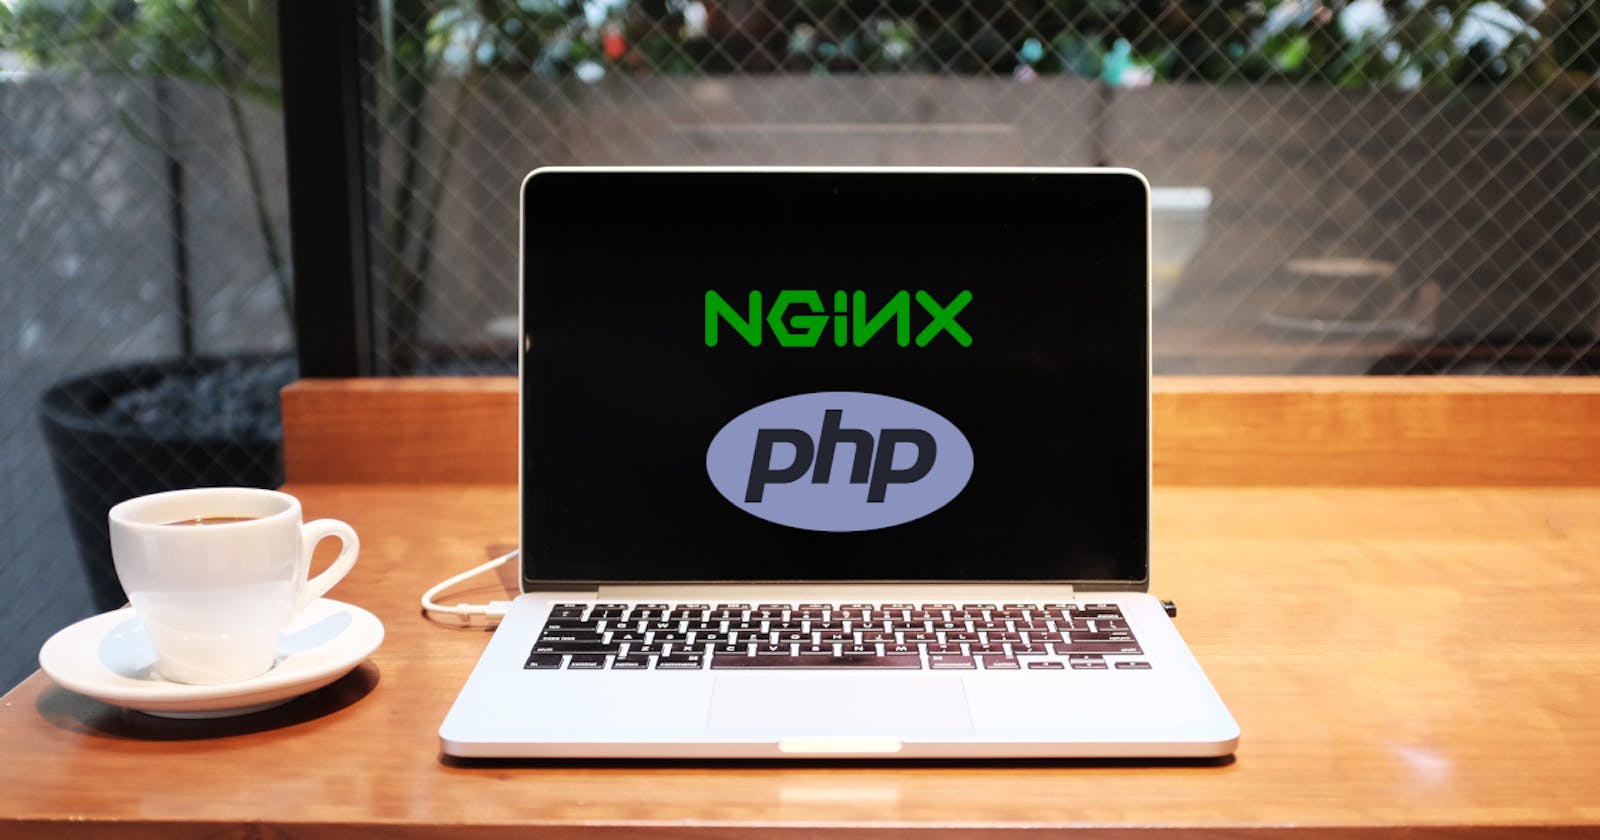 Configurando NGINX + PHP no macOS